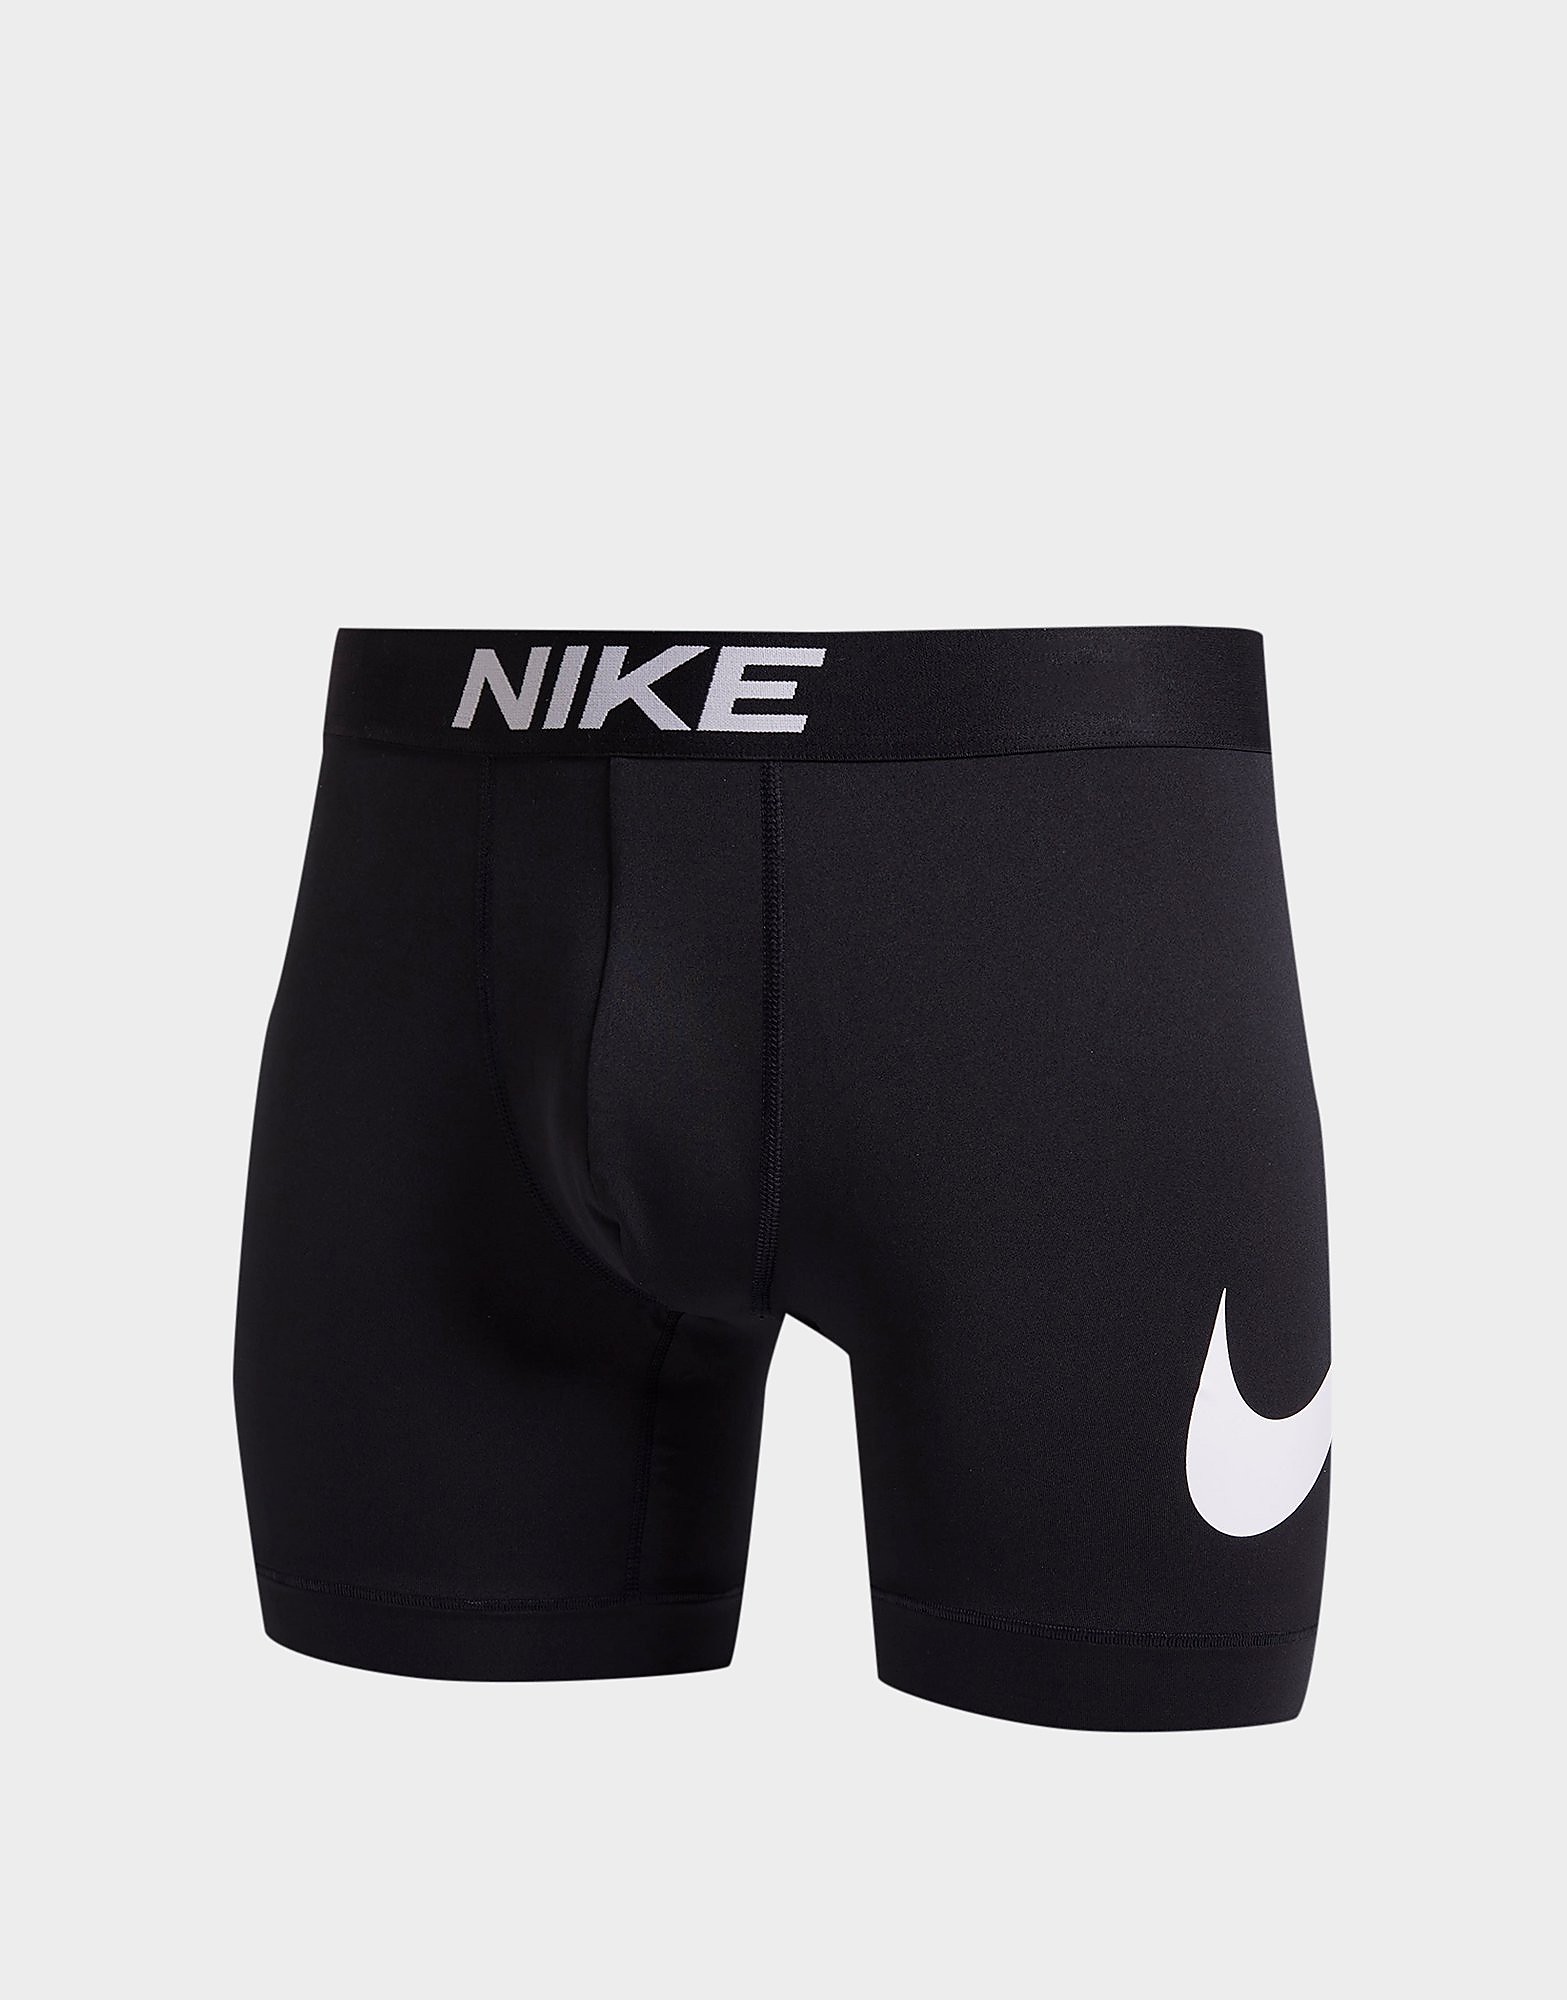 Nike bokserit miehet - mens, musta, nike